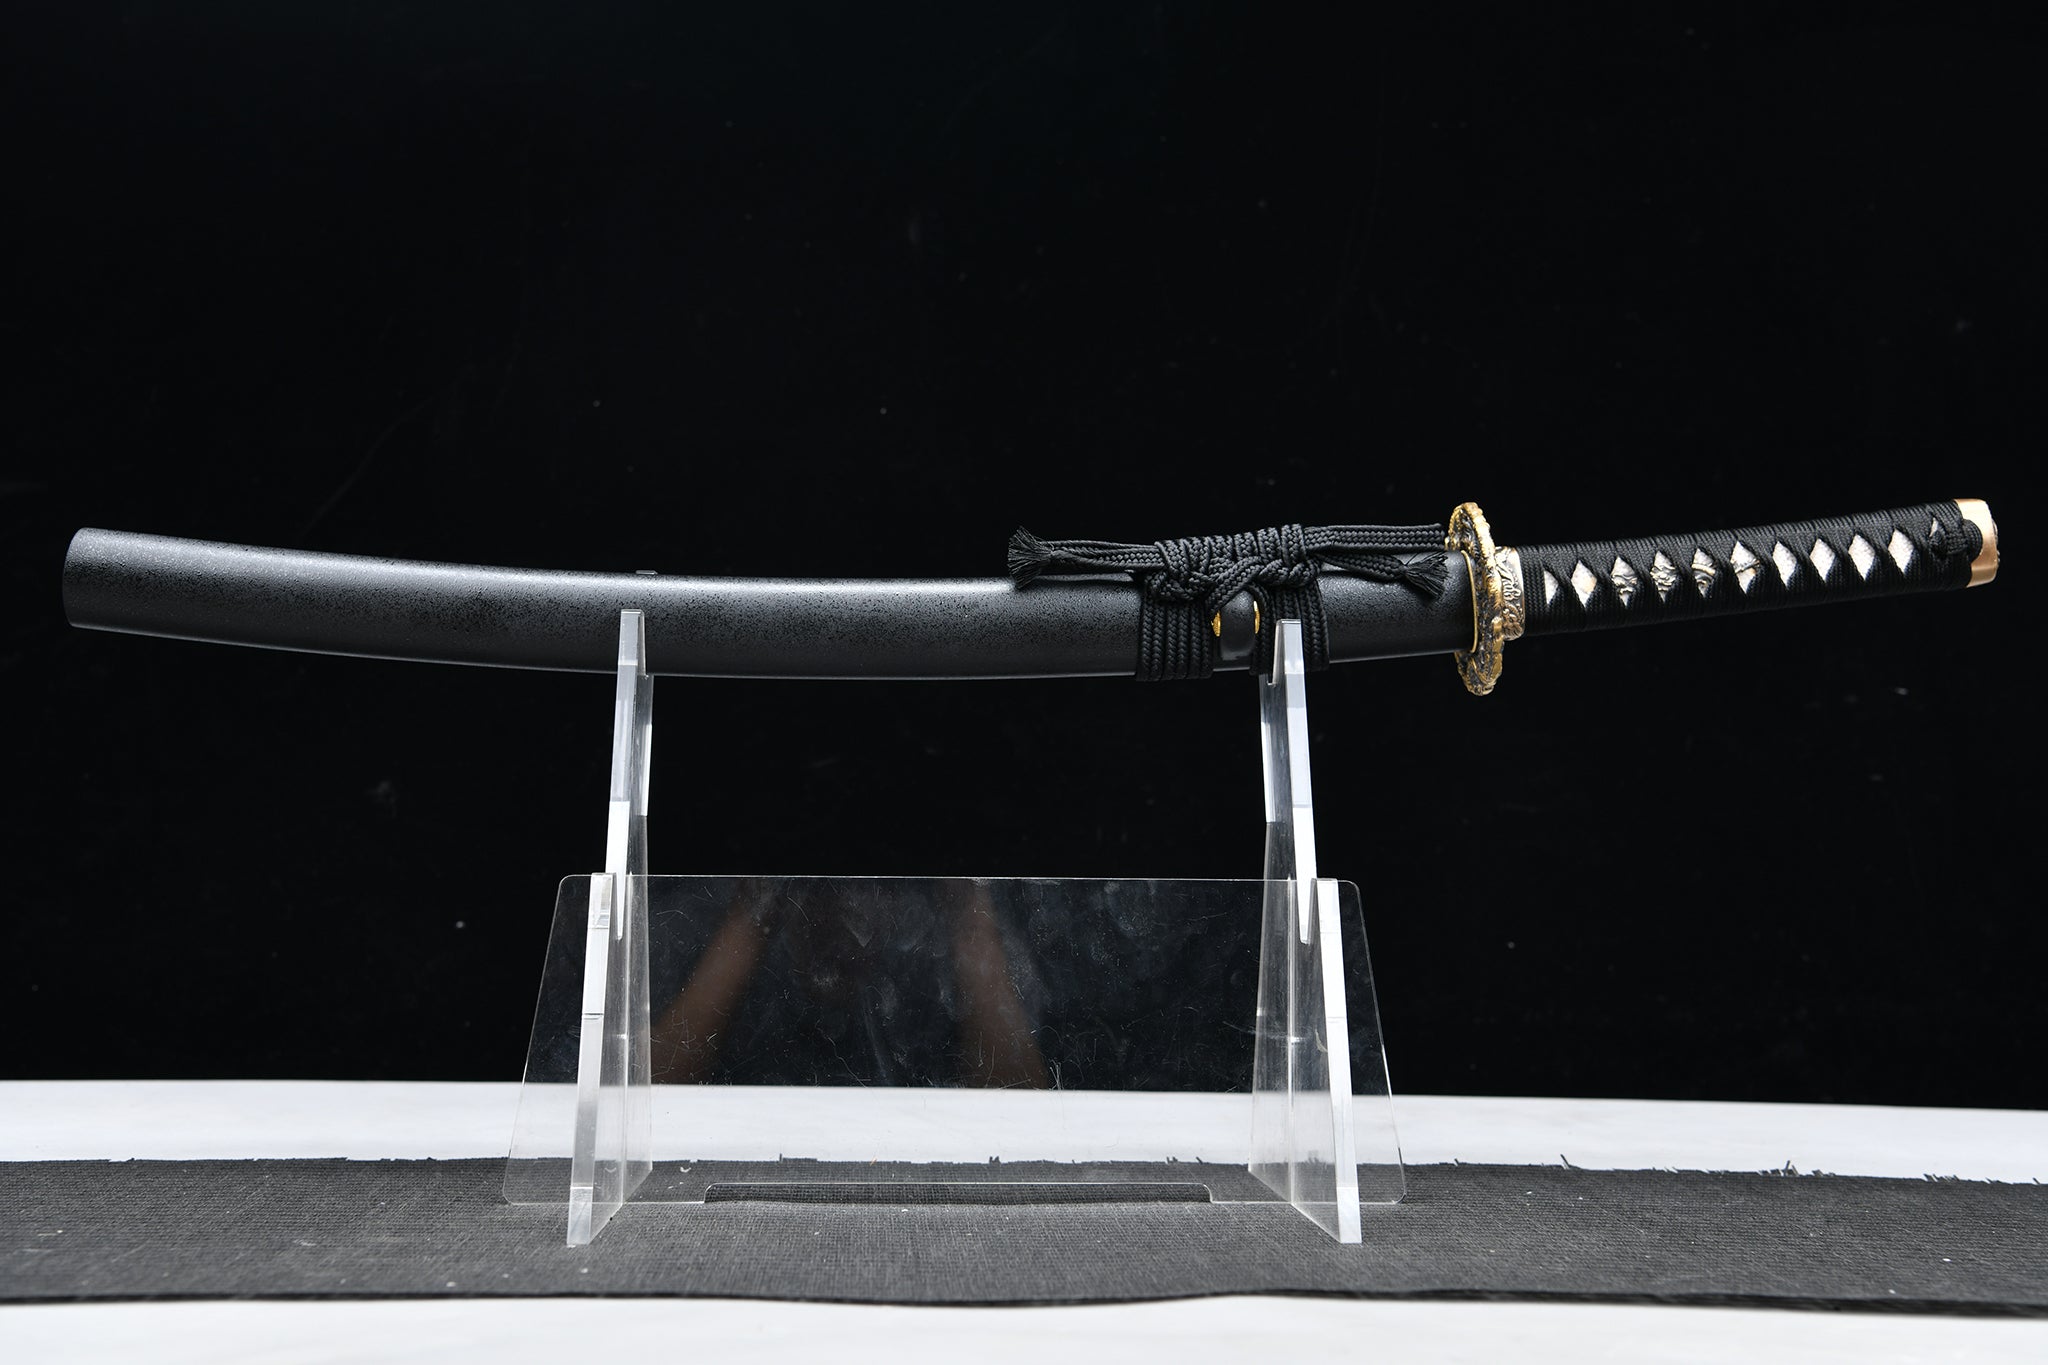 X02-Yunloong-pure copper pattern steel samurai sword